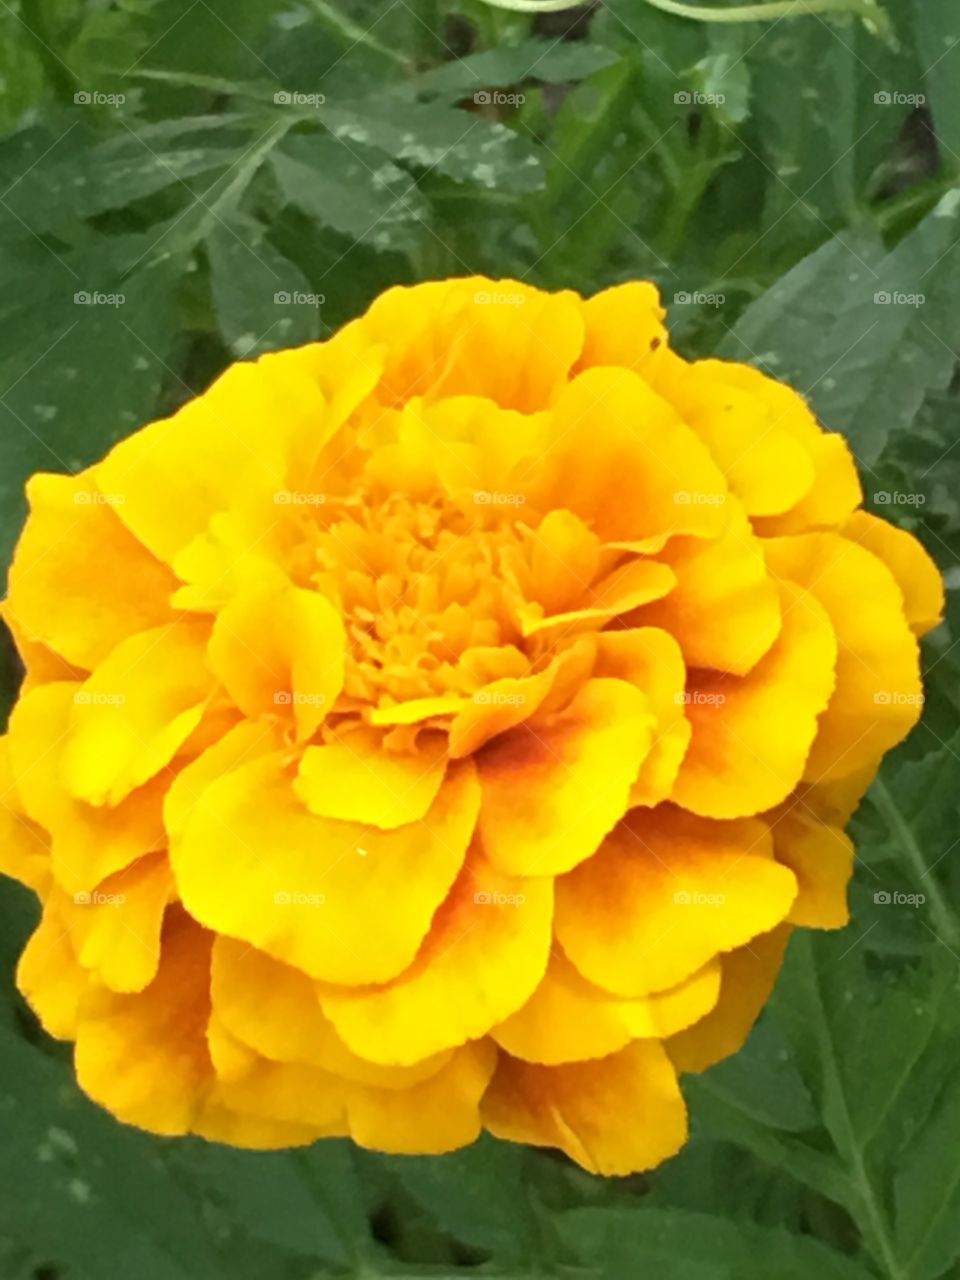 Wonderful Queen Sophia marigold in full bloom with her vivid color!